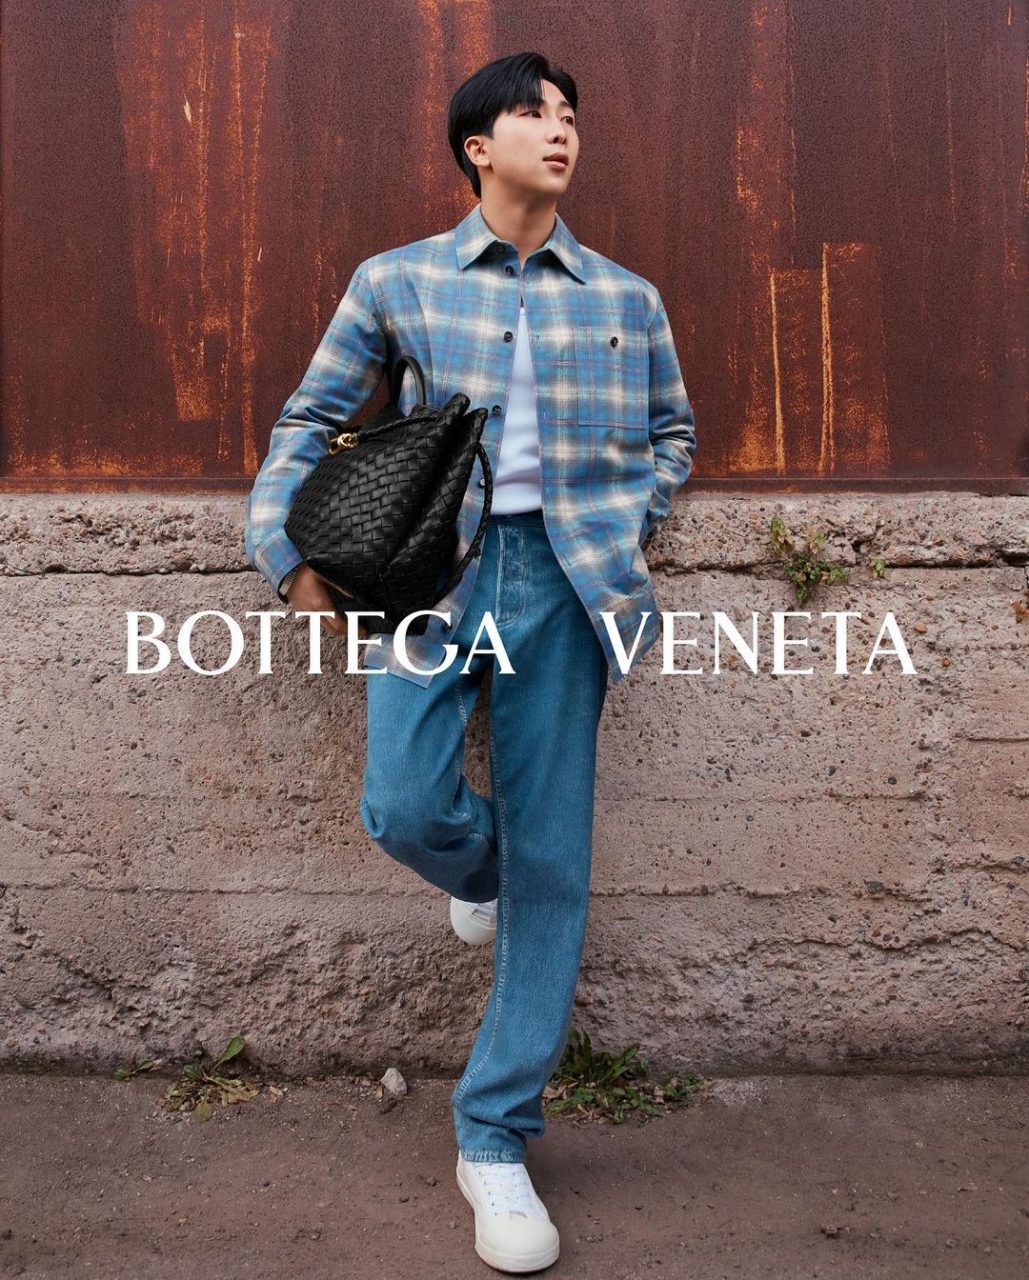 RM twts cuz he is now the first ambassador of Bottega Veneta !!! in 2023